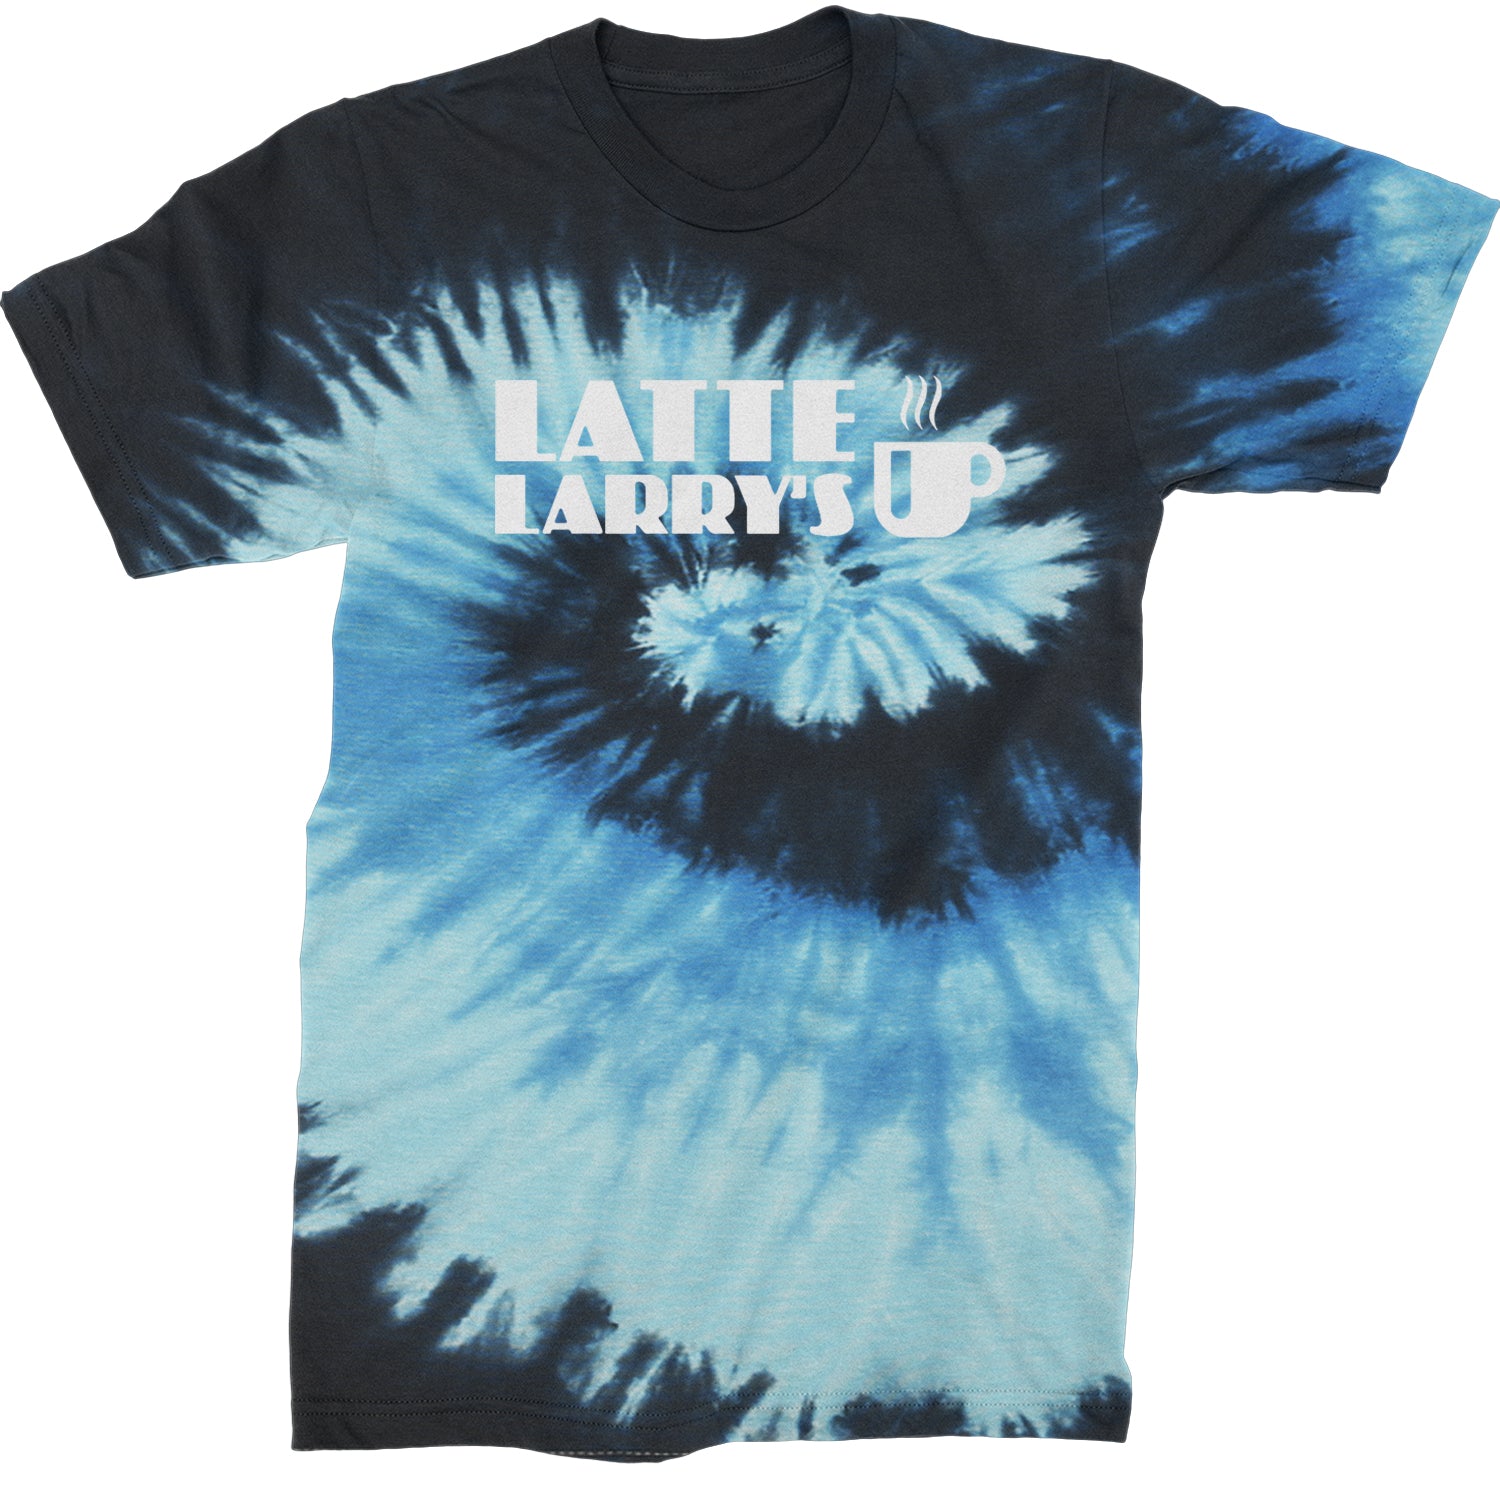 Latte Larry's Enthusiastic Coffee Mens T-shirt Tie-Dye Blue Ocean